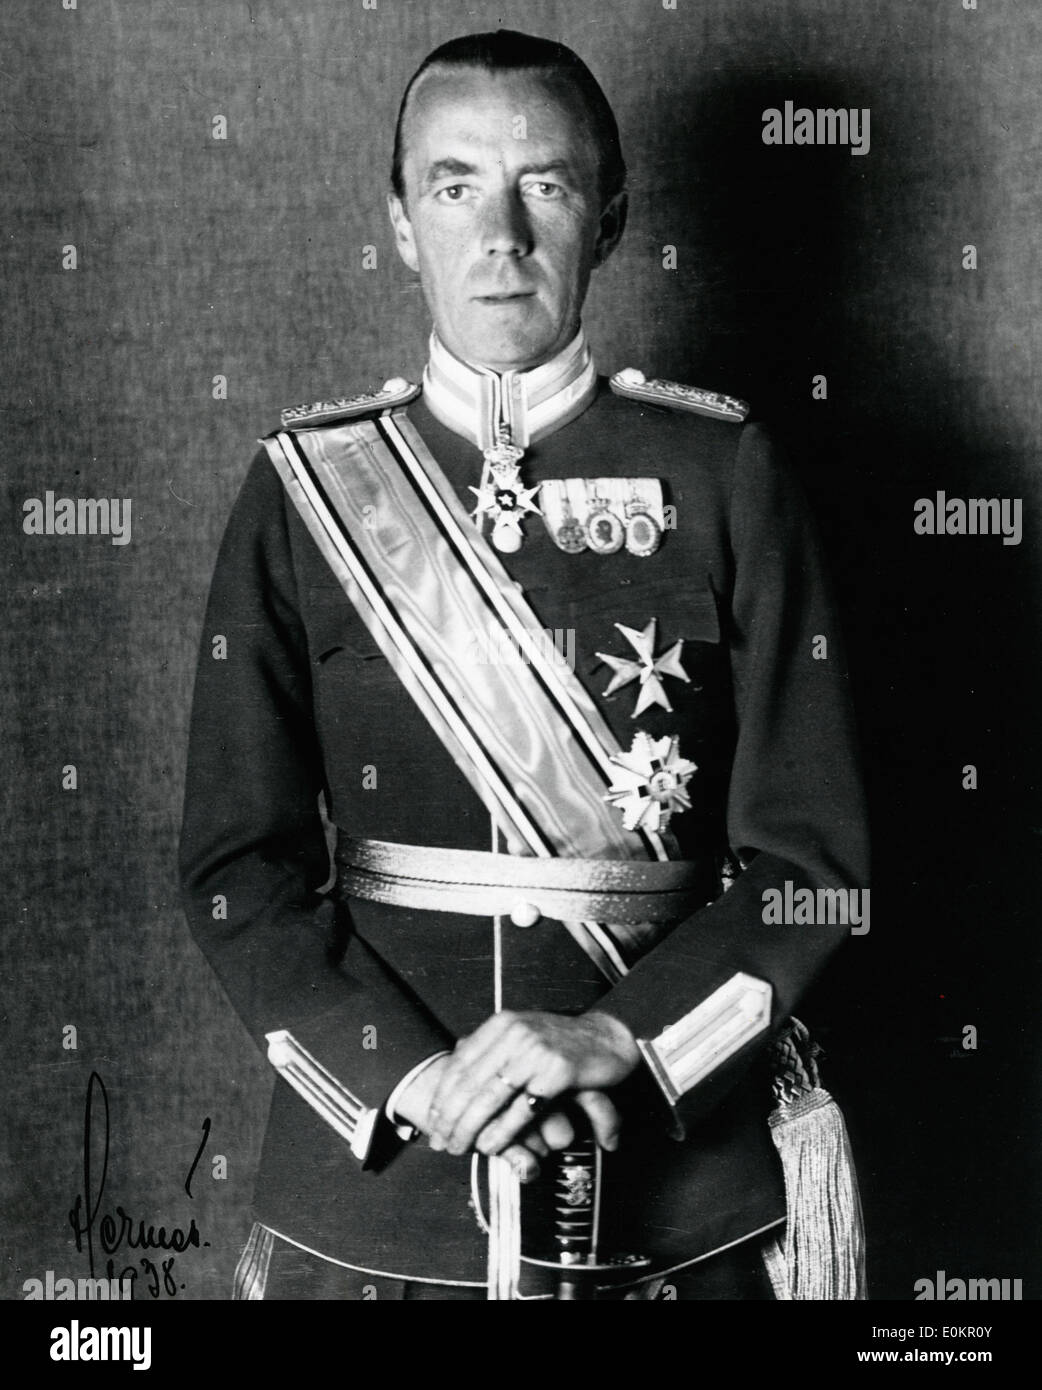 Portrait of Count Folke Bernadotte the United Nations Mediator Stock Photo